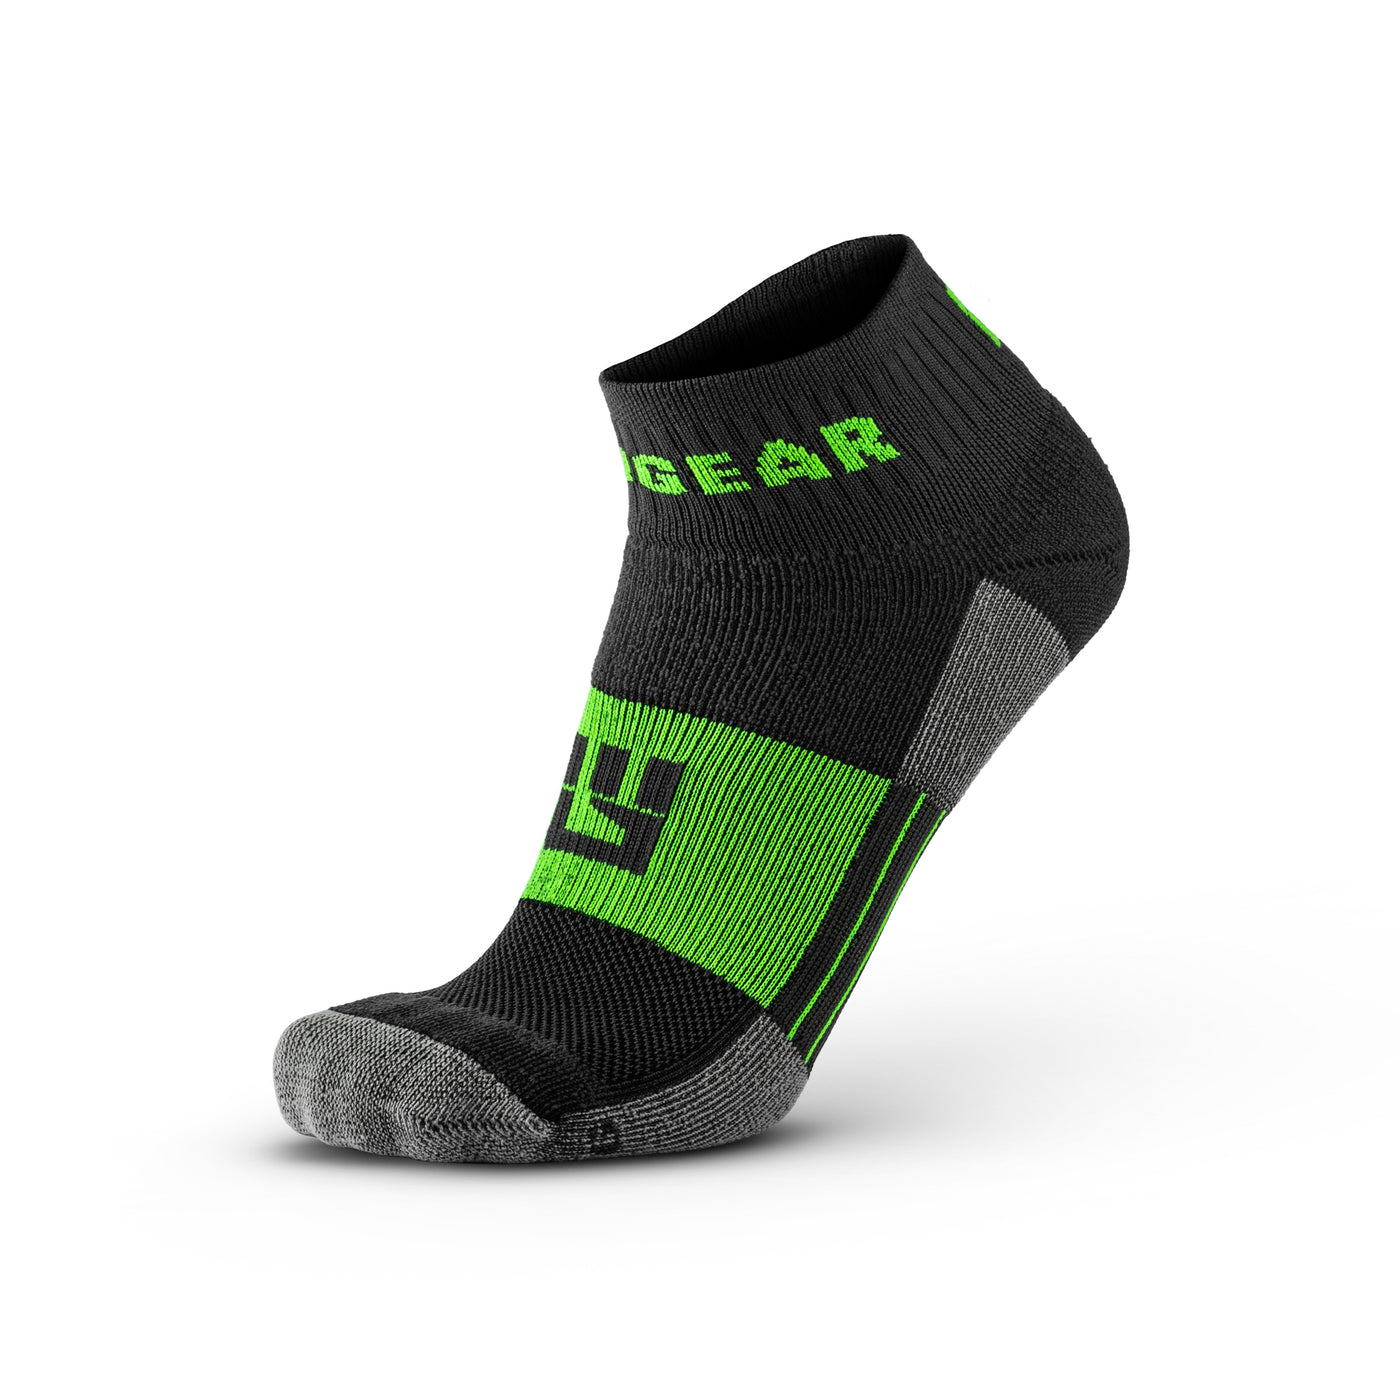 Best socks for OCR by Mudgear